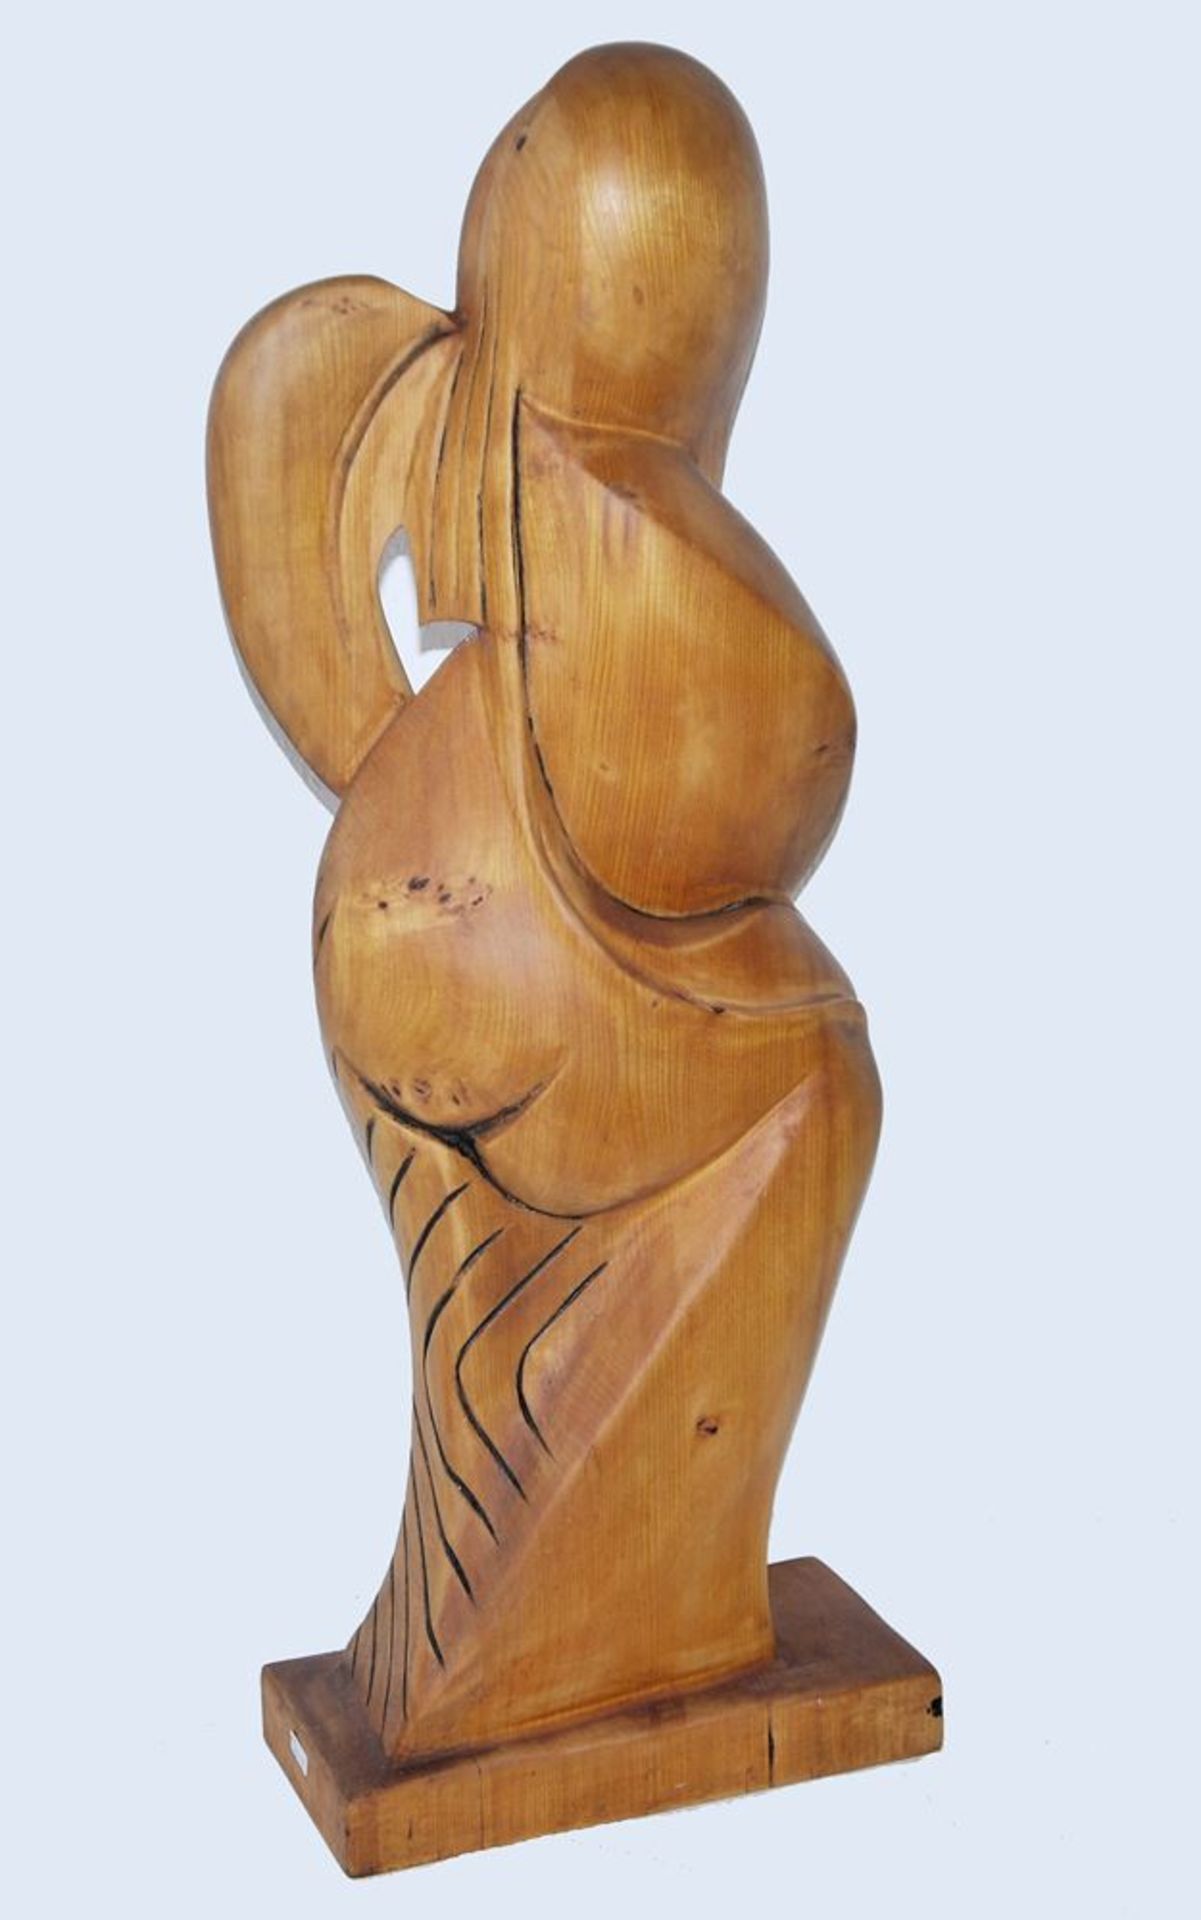 Ortrud Heuser-Hickler, Niobe, wood sculpture from 1987 - Image 2 of 3